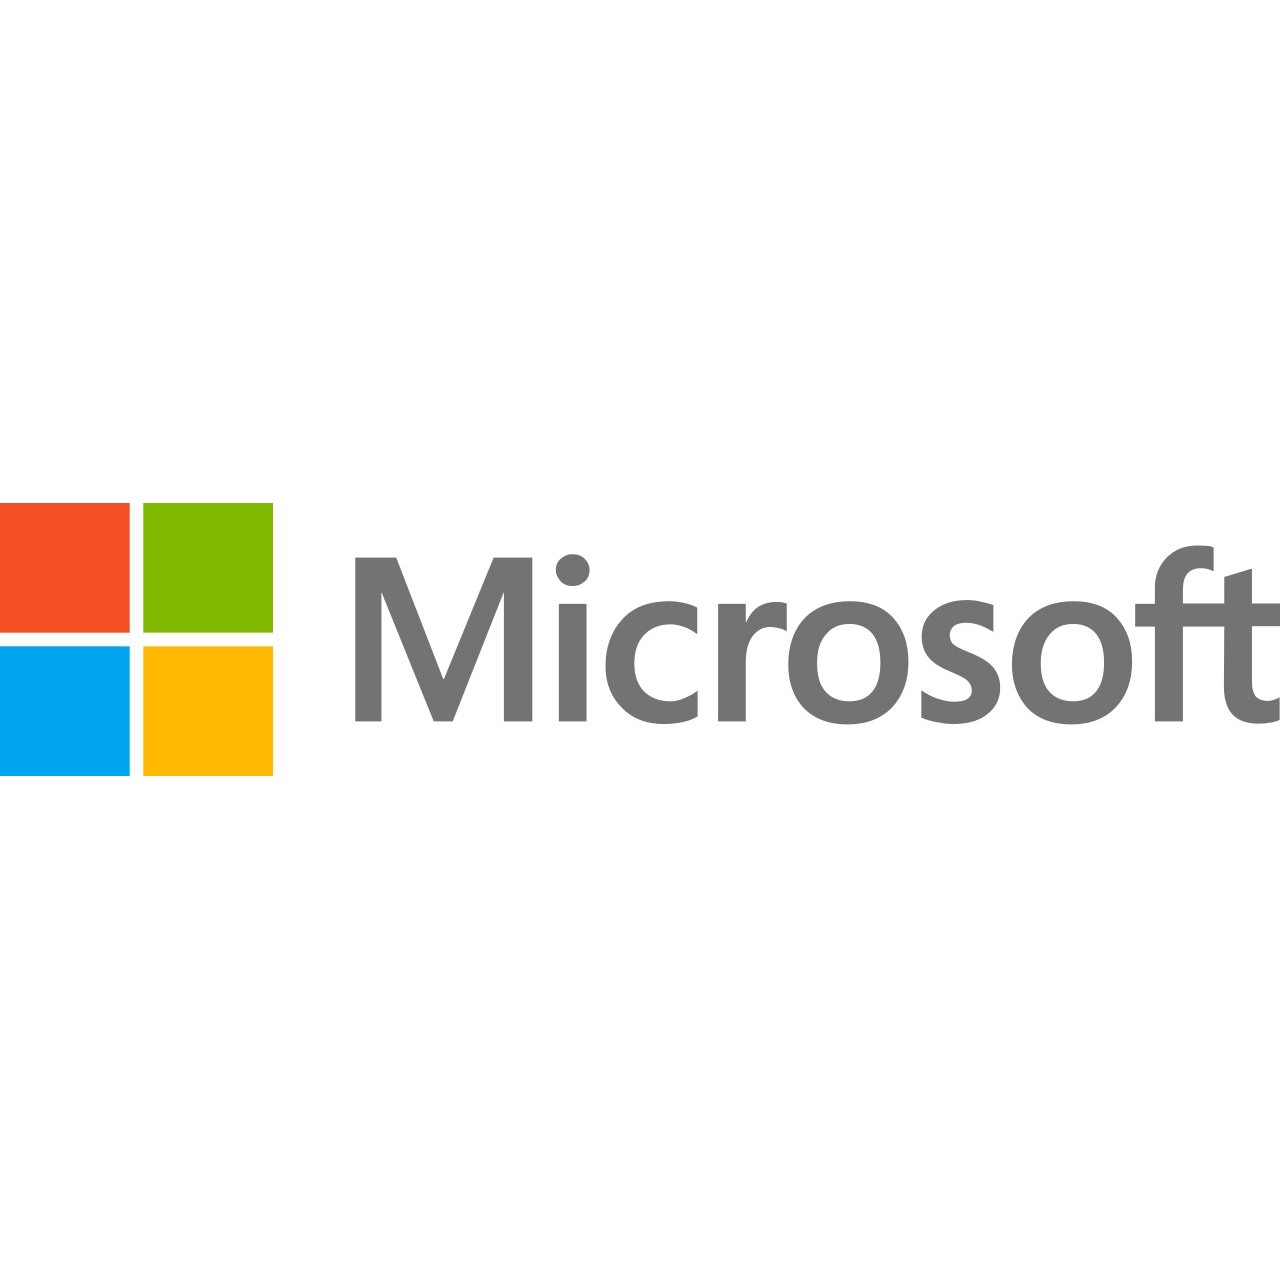 Microsoft 365 Business Standard 1 Lizenz(en) Abonnement Deutsch 1 Jahr(e)